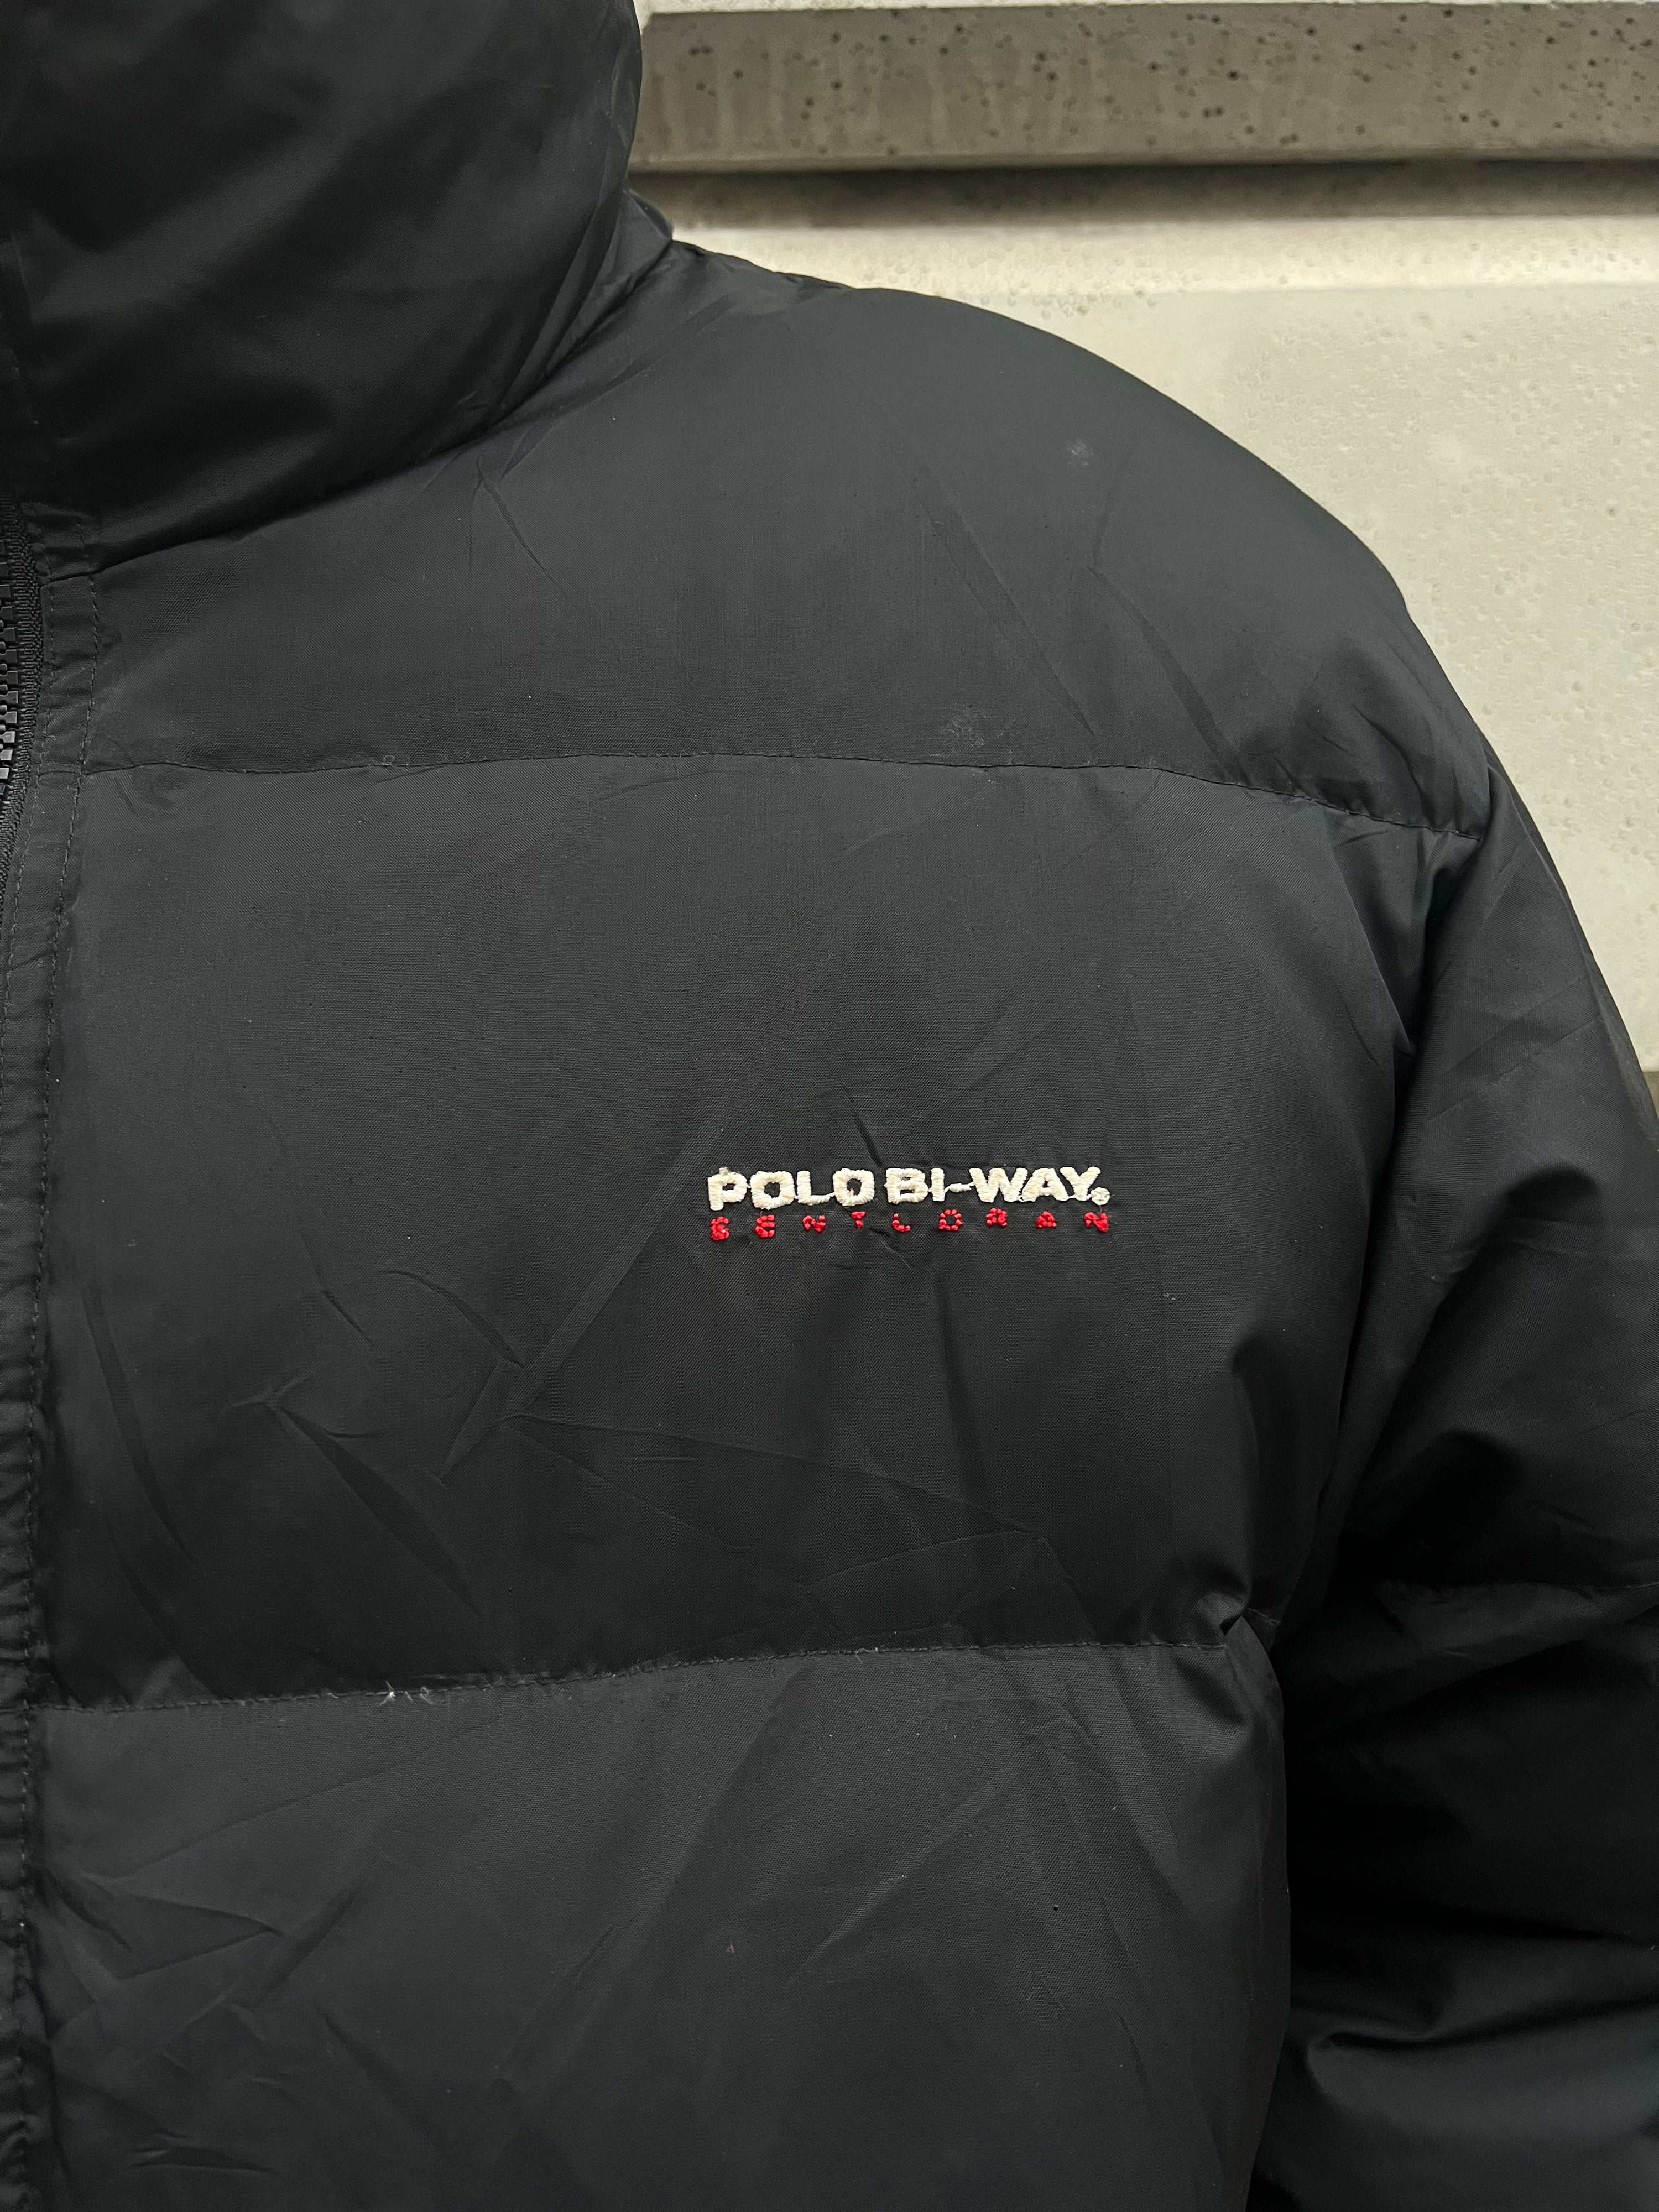 Early 2000s Polo Bi-Way 2 in 1 Puffer Jacket (L)